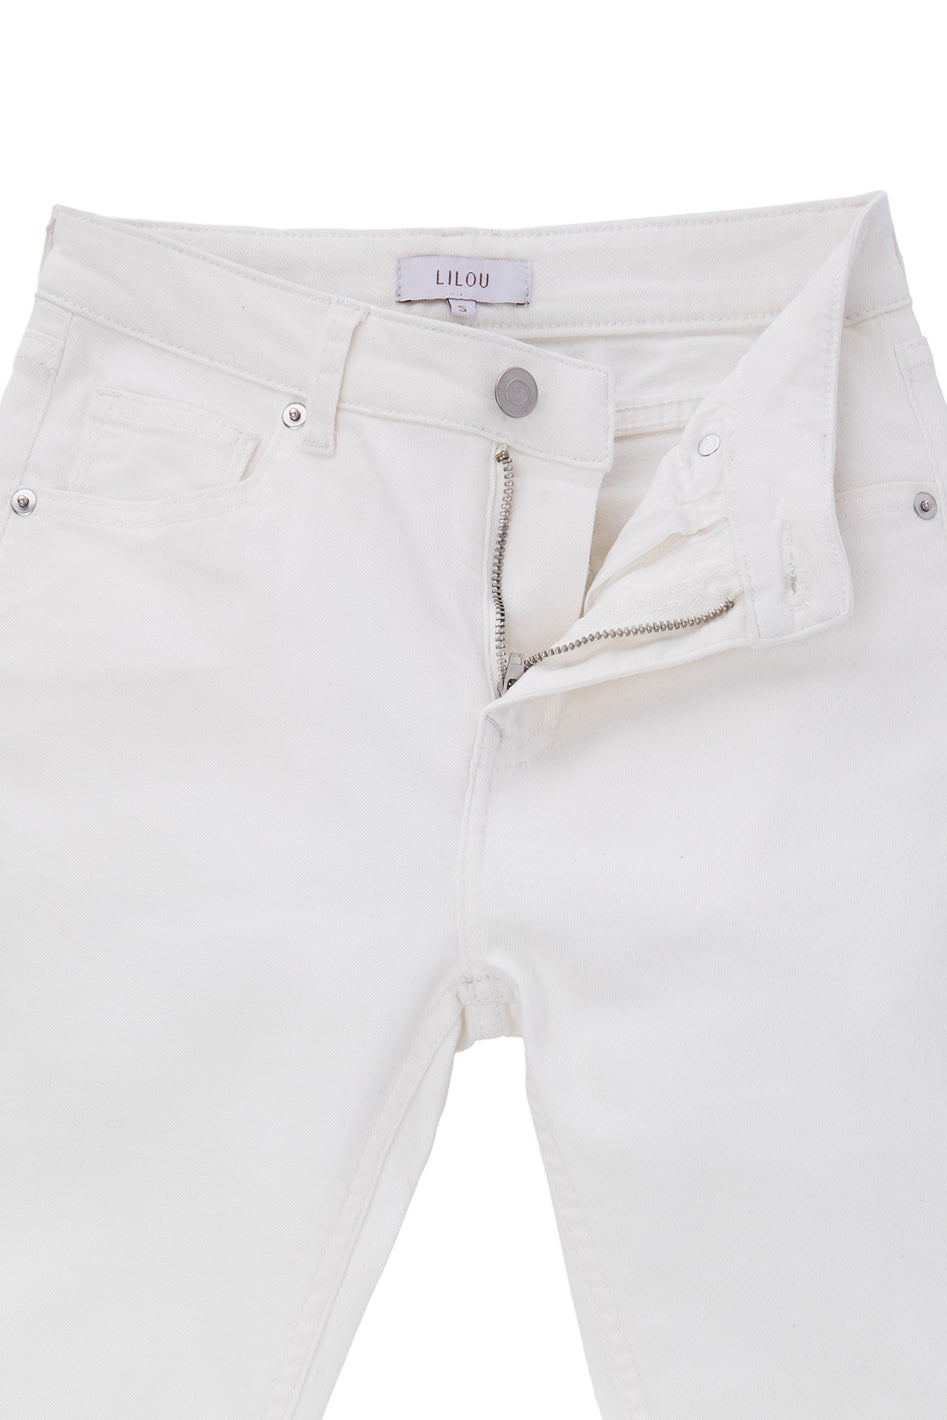 White skinny jeans - Azoroh